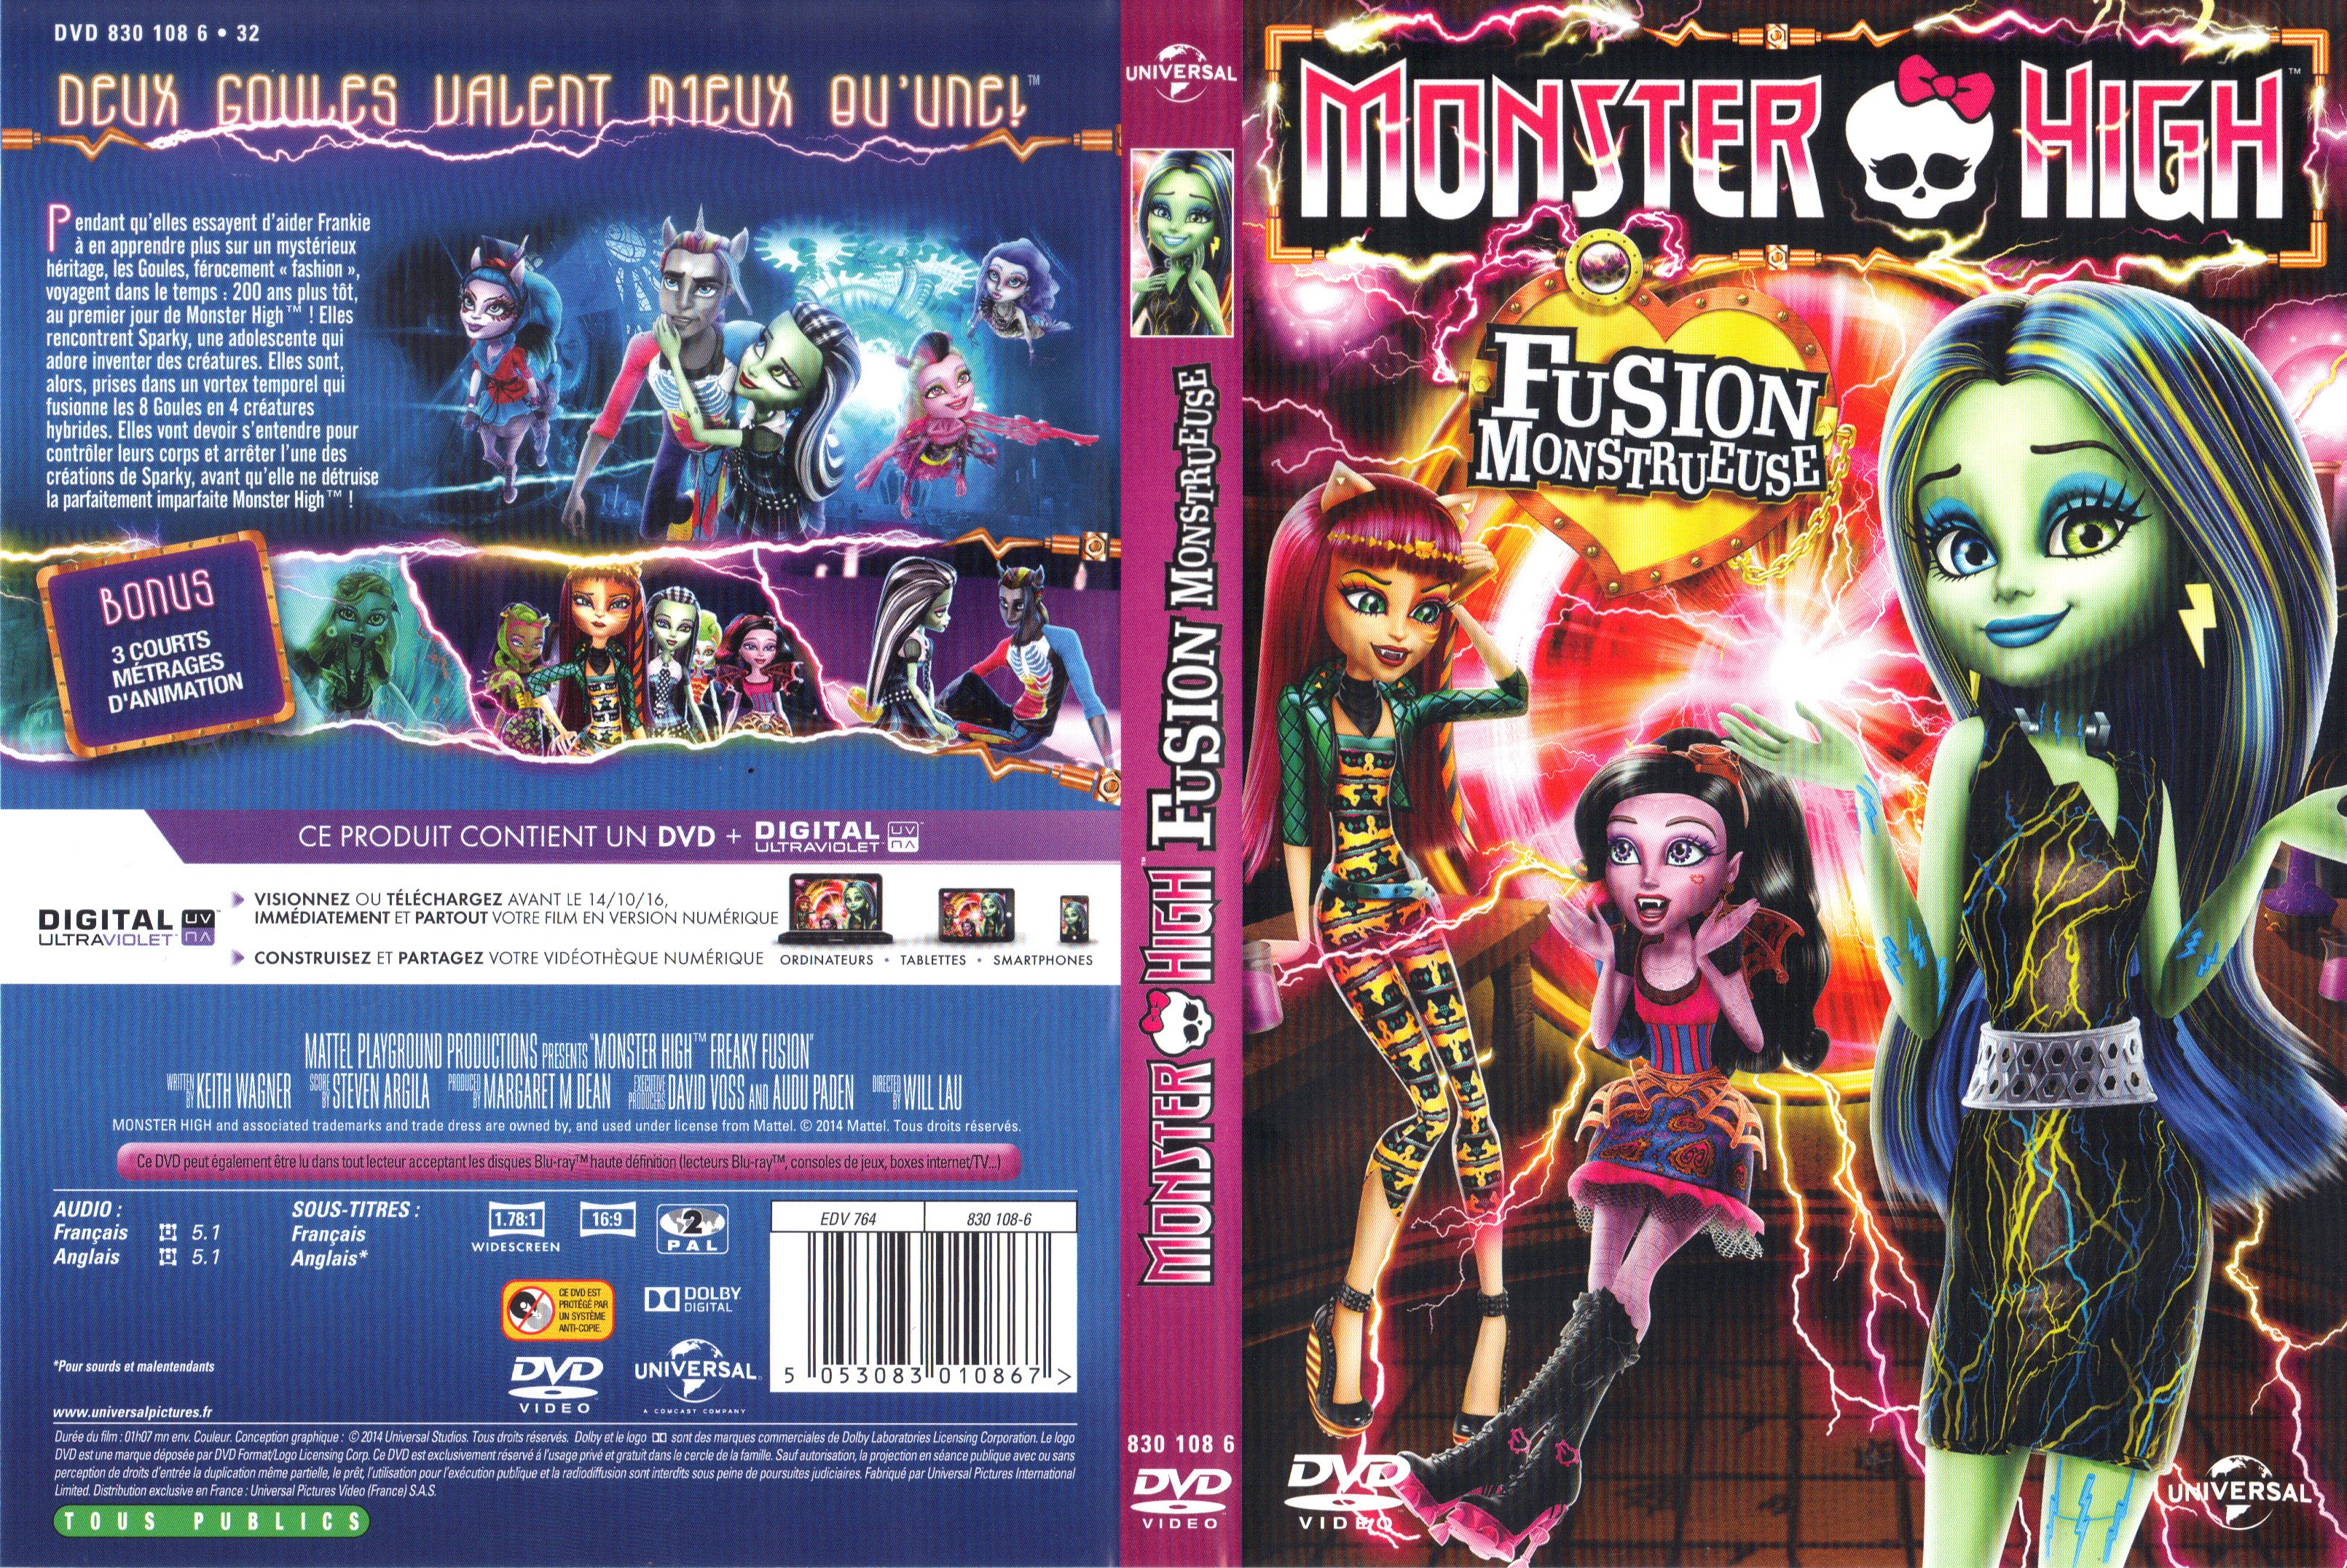 Jaquette DVD Monster High - Fusion monstrueuse